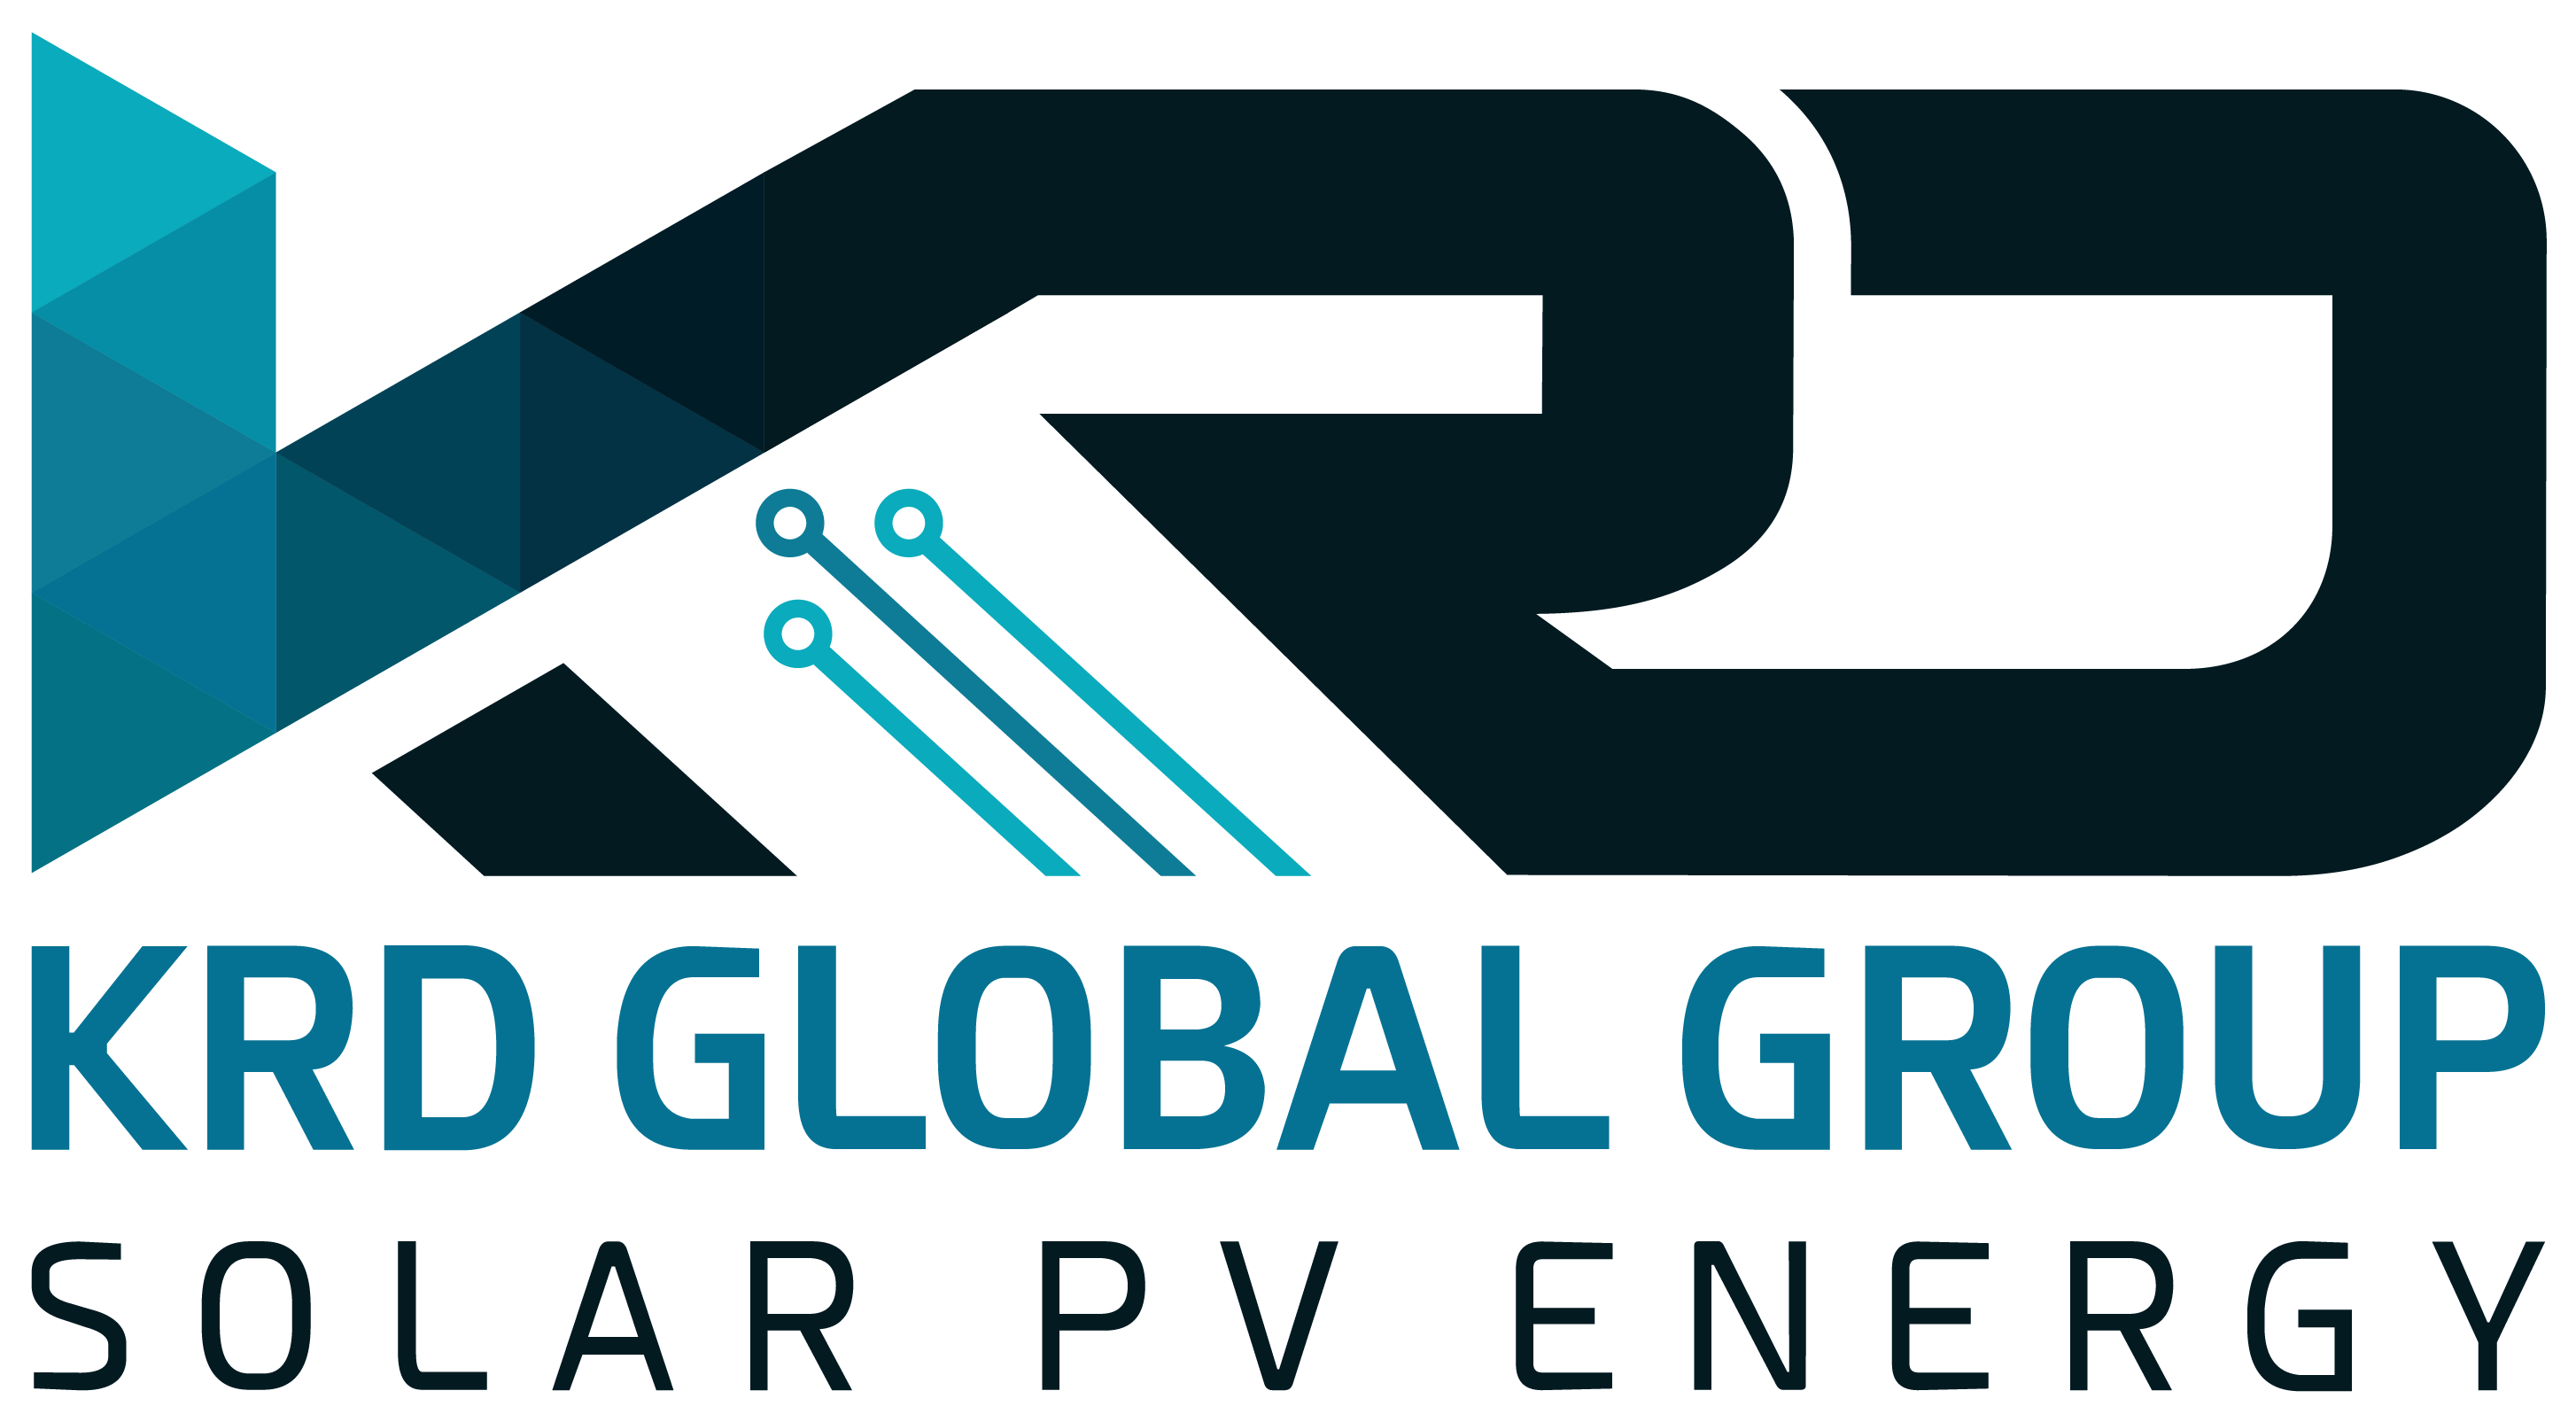 KRD Global Group